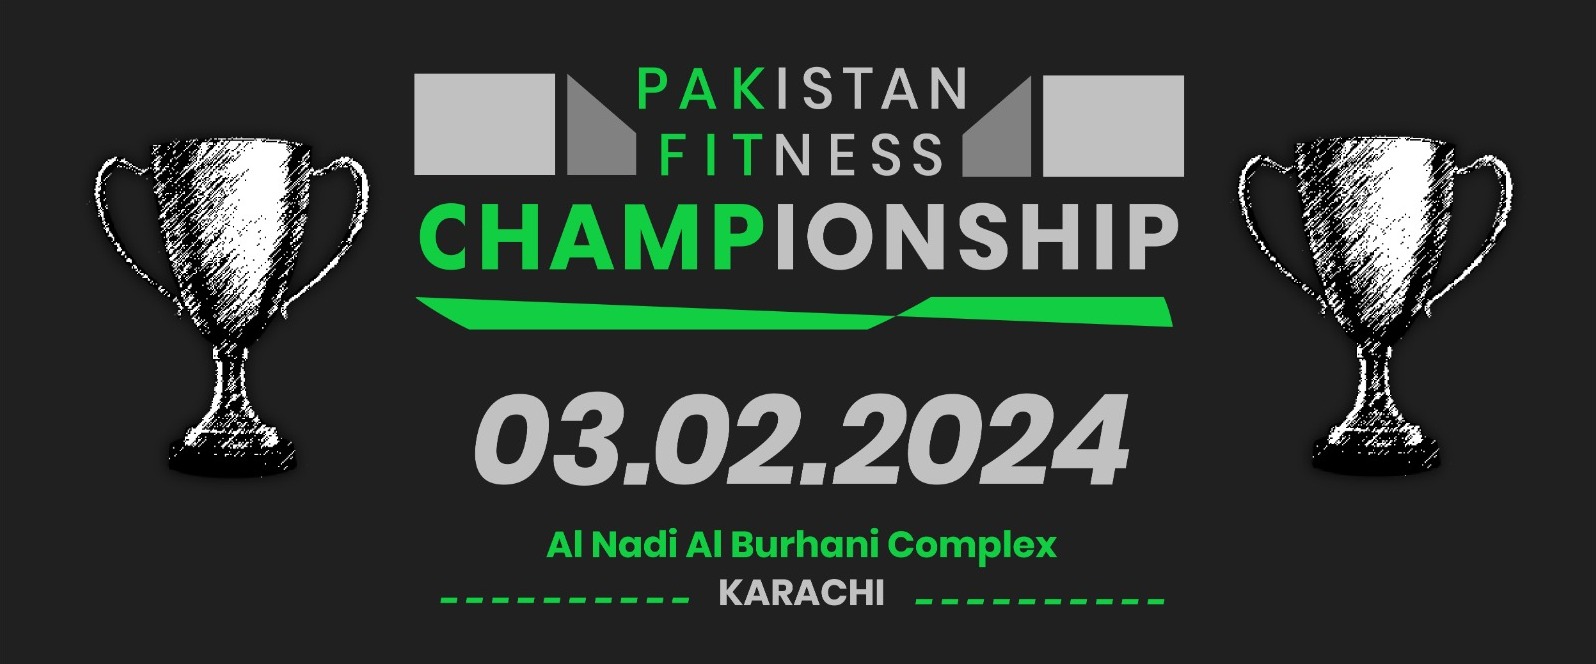 Pakistan Fitness Championship